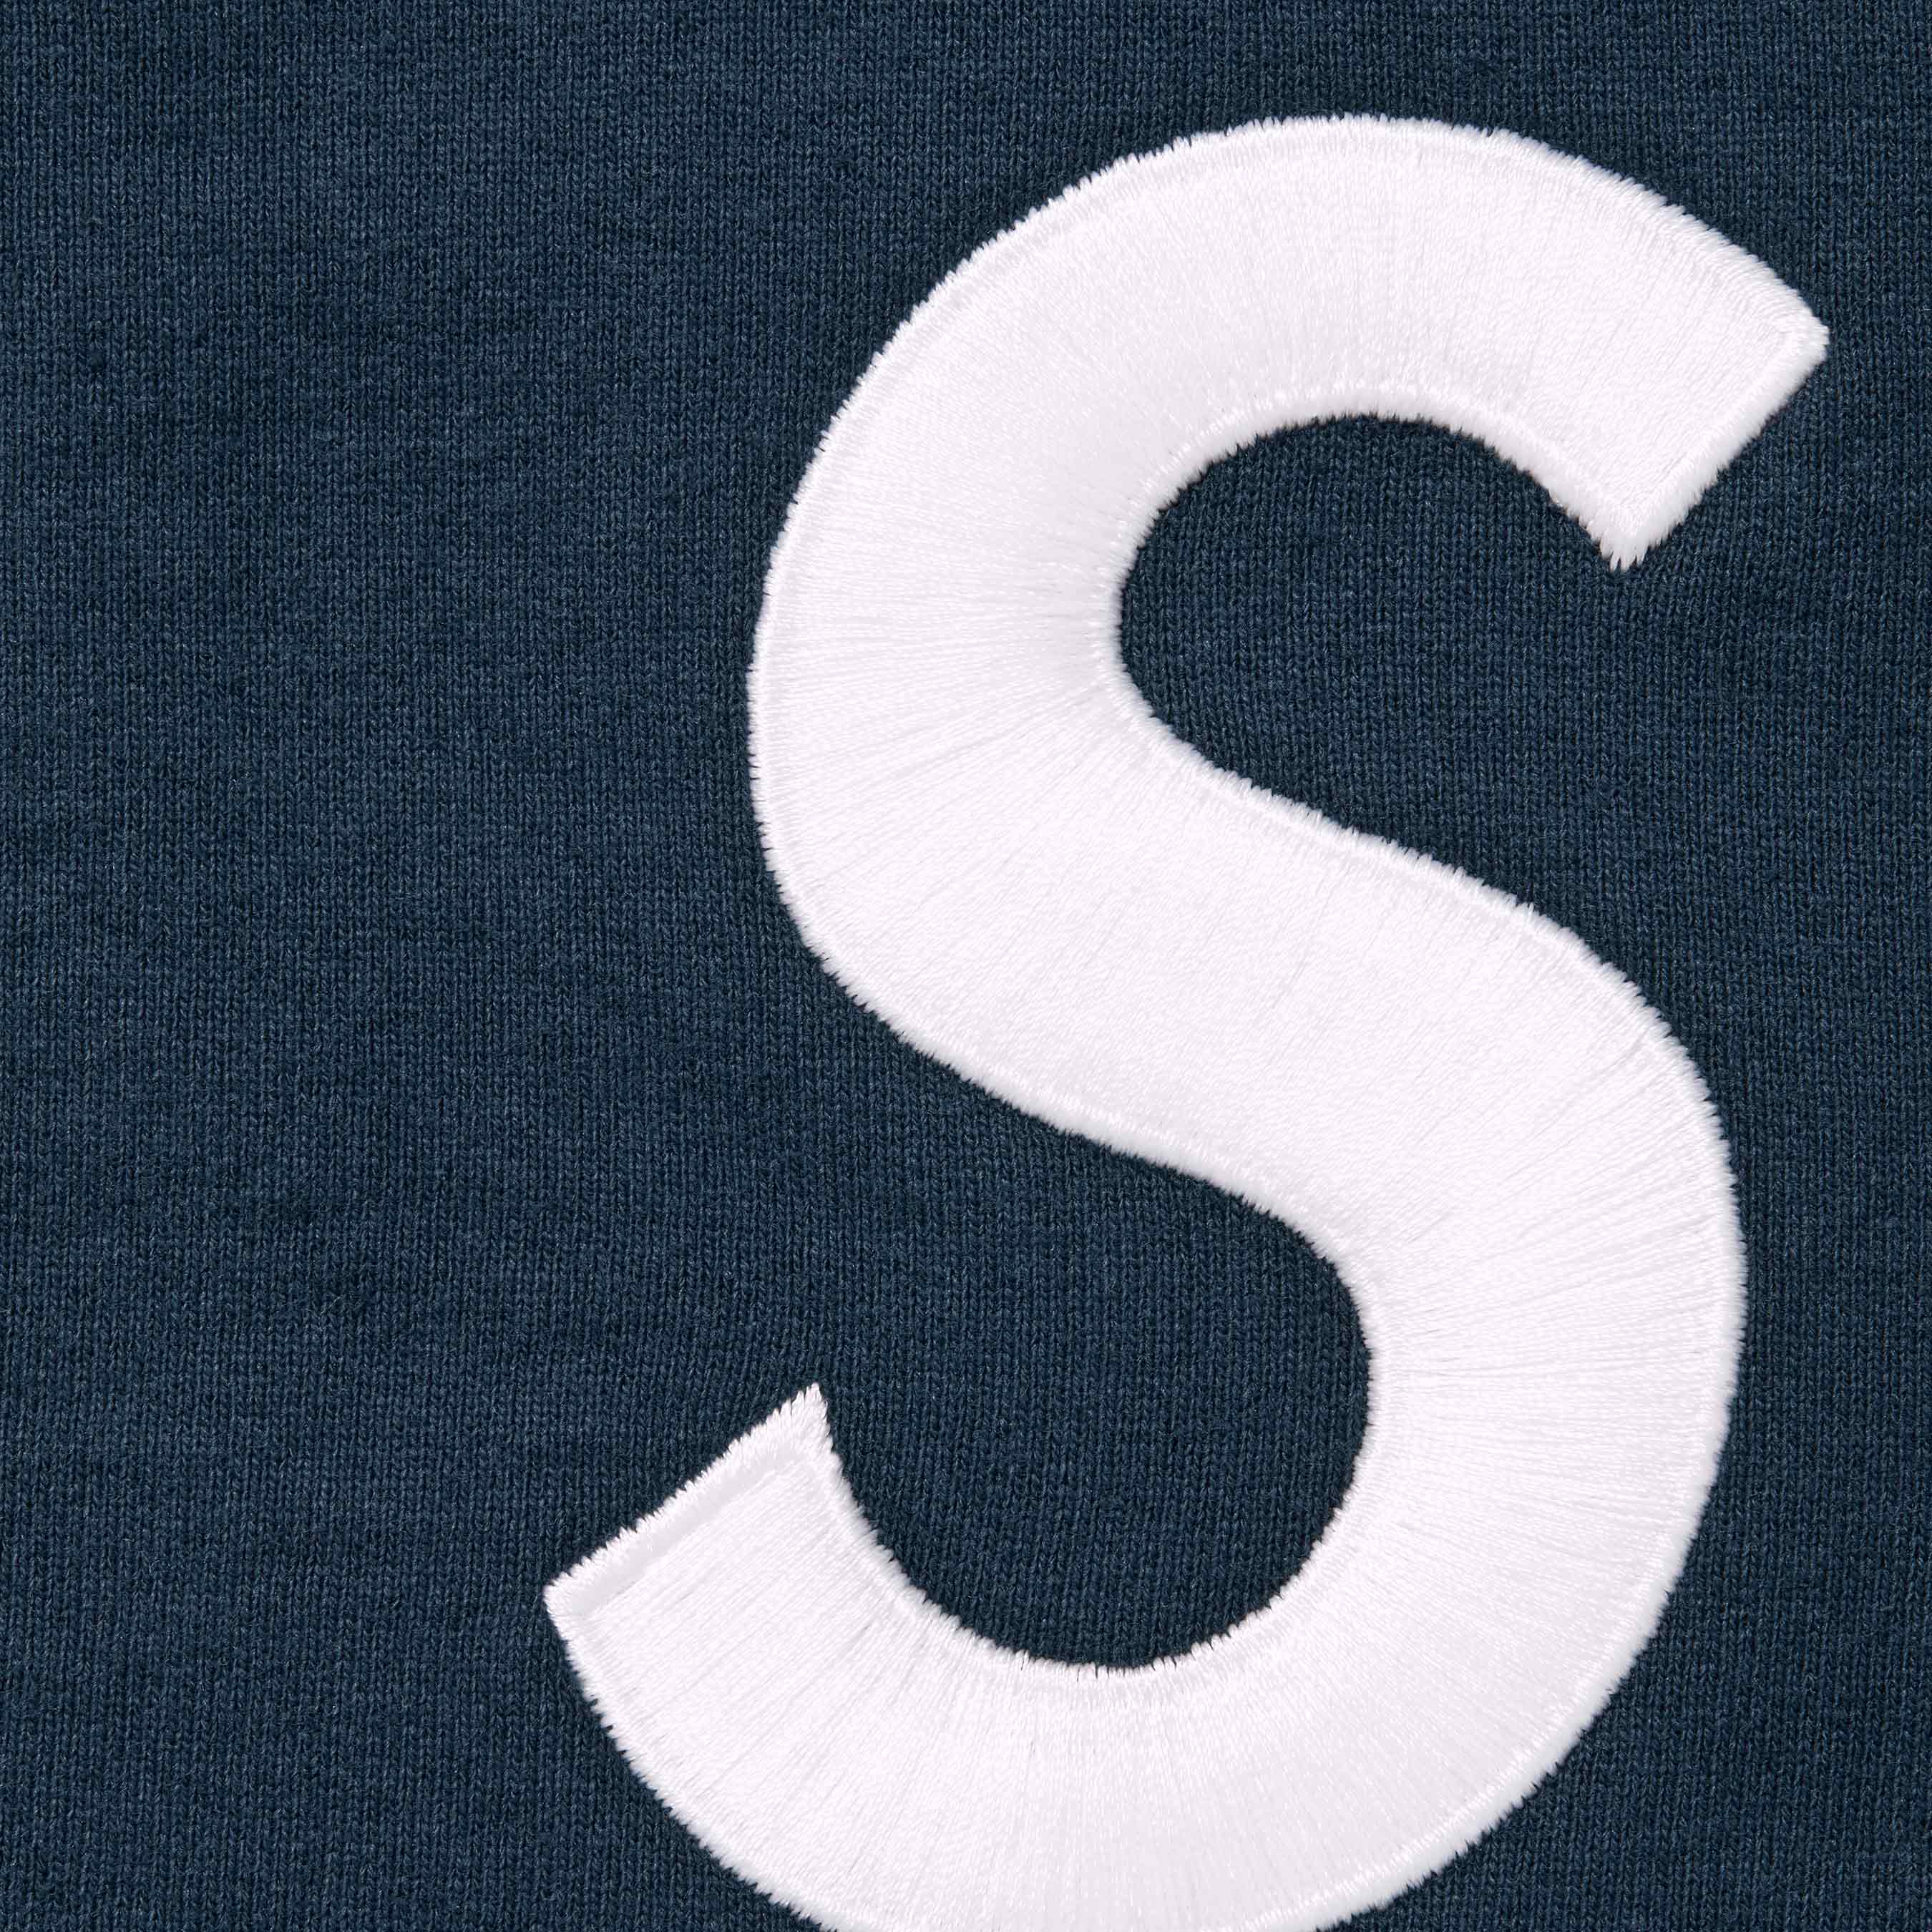 S Logo Zip Up Hooded Sweatshirt - fall winter 2023 - Supreme